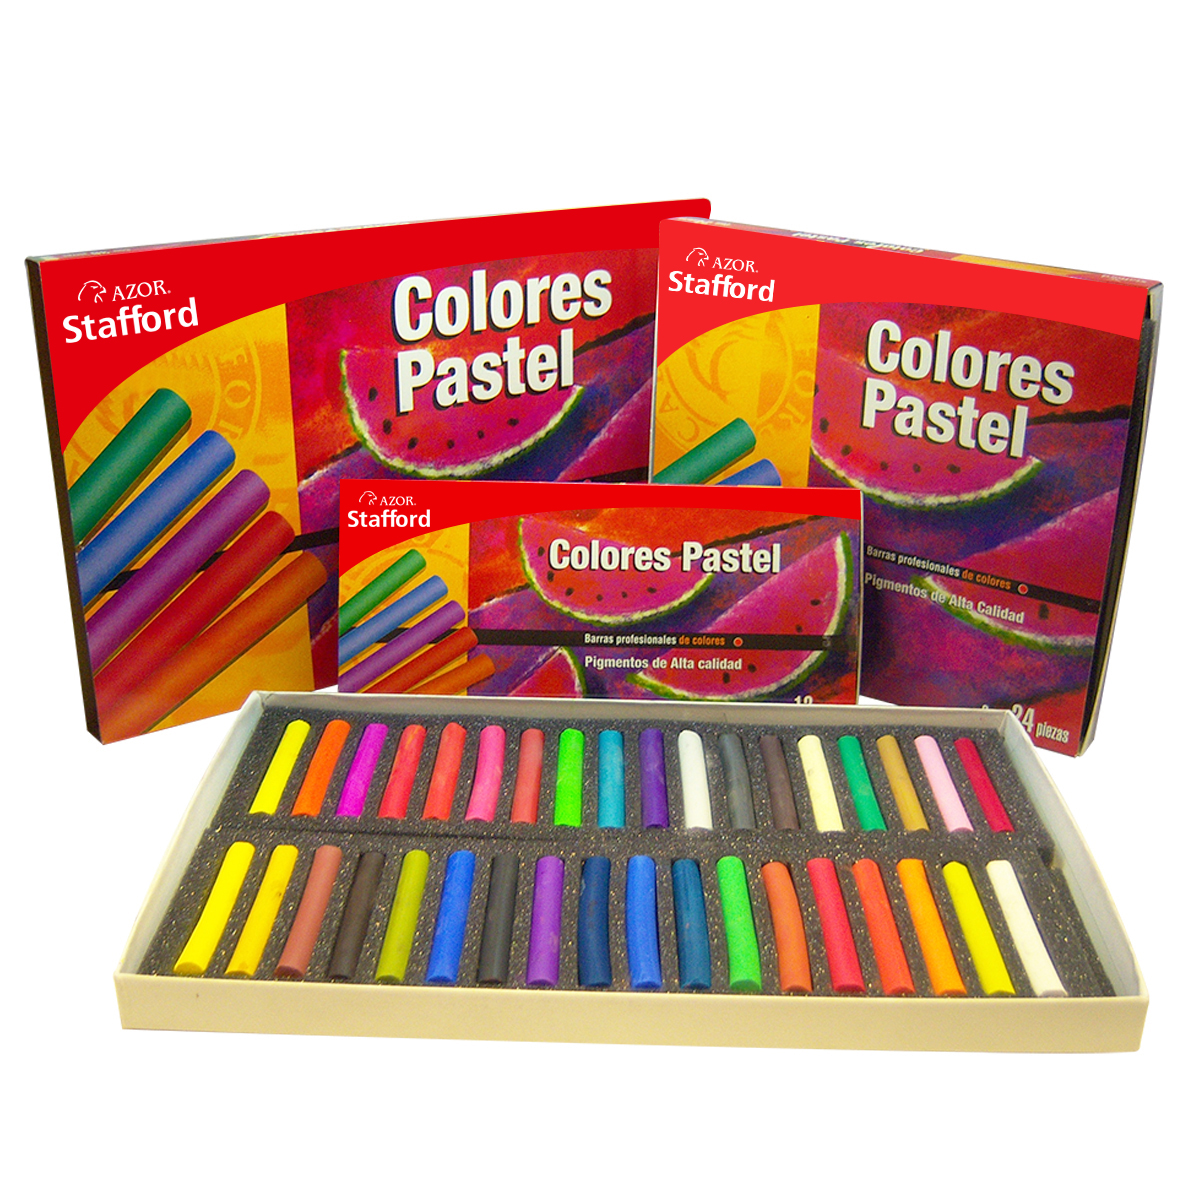 https://www.papeleriamorelos.com.mx/storage/productos/786-100-colores-pasteljpg